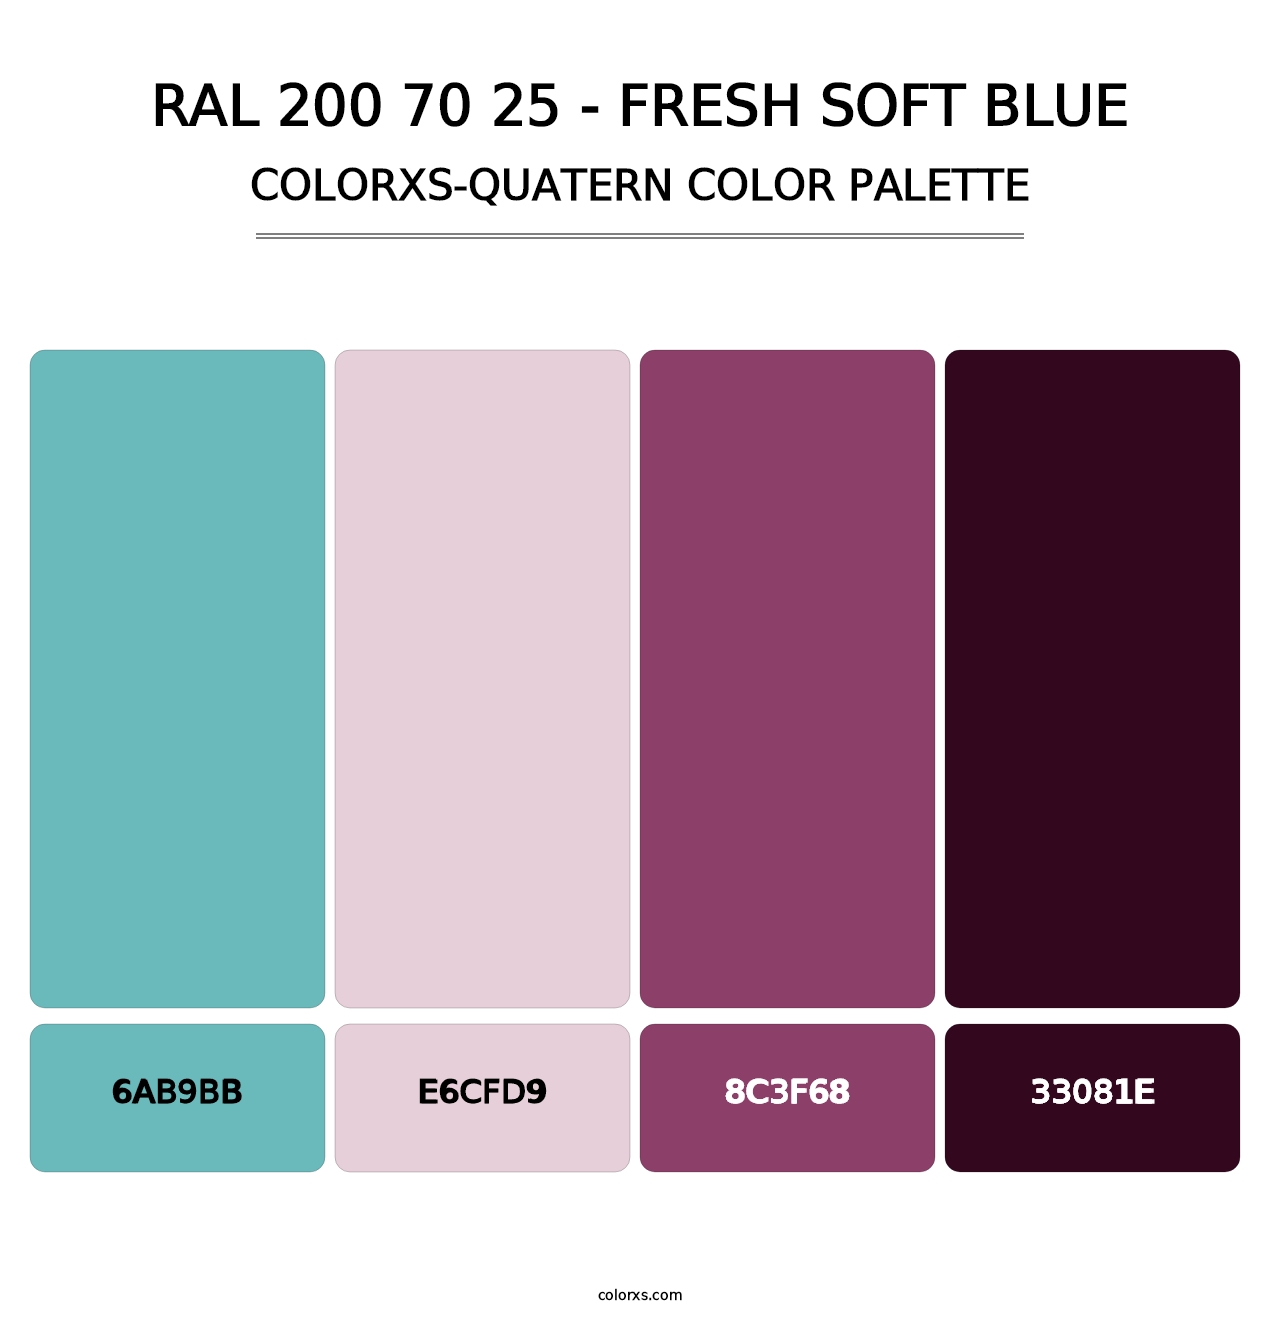 RAL 200 70 25 - Fresh Soft Blue - Colorxs Quatern Palette